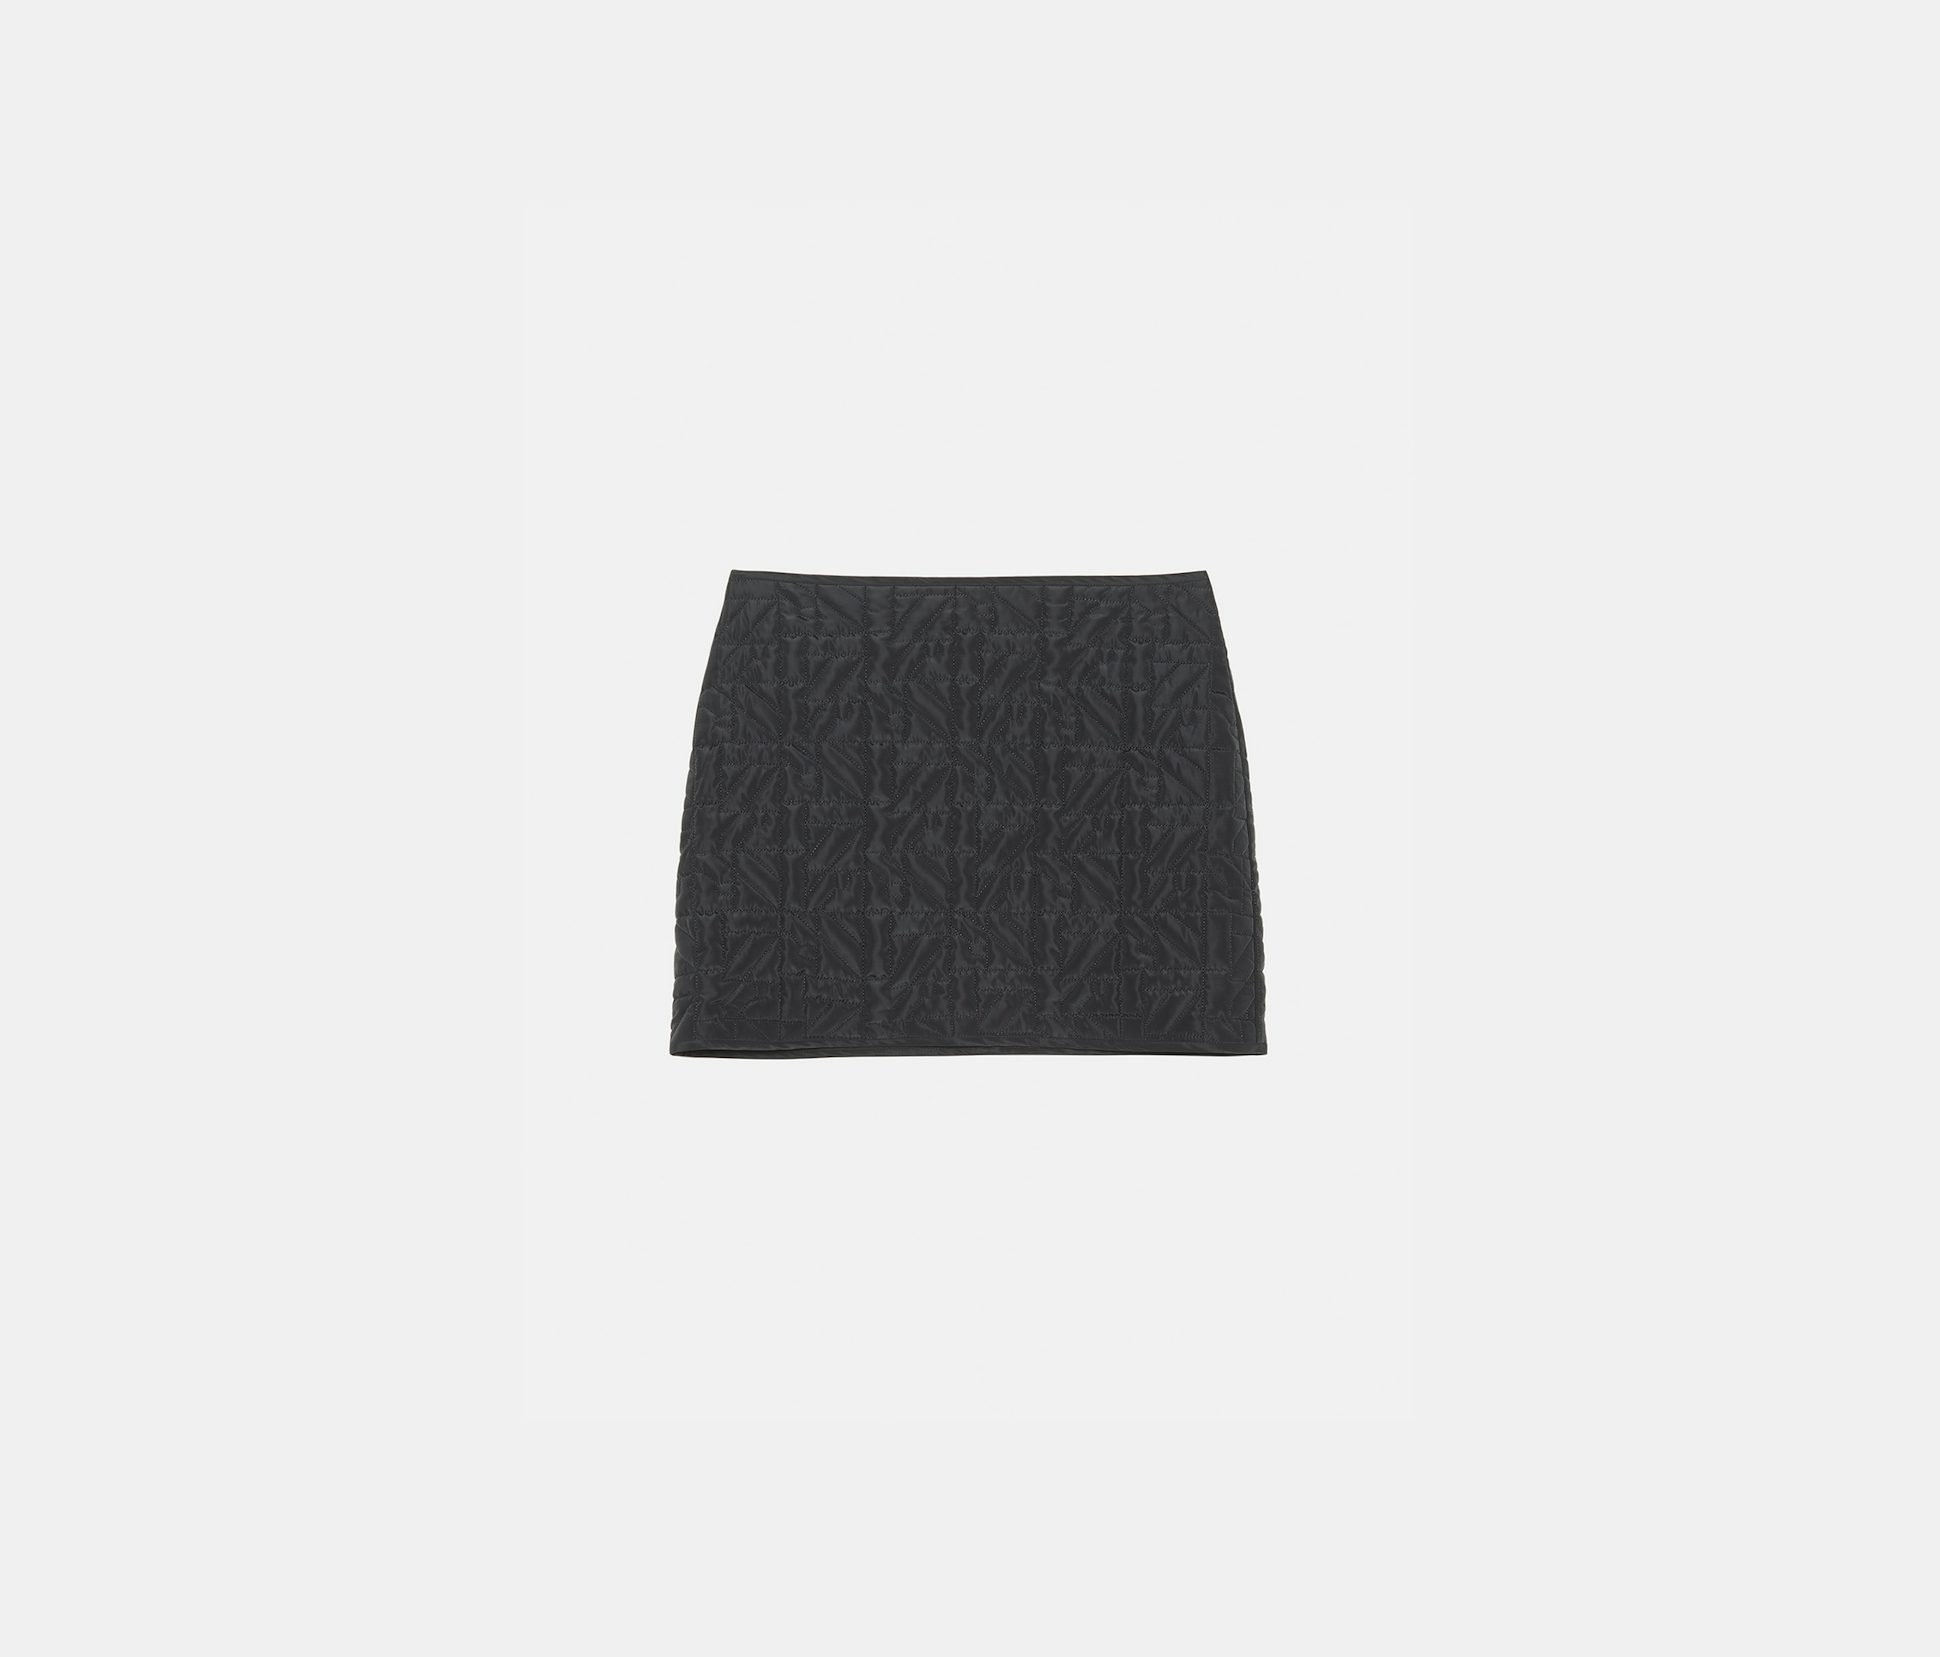 Quilted mini skirt black - Nina Ricci